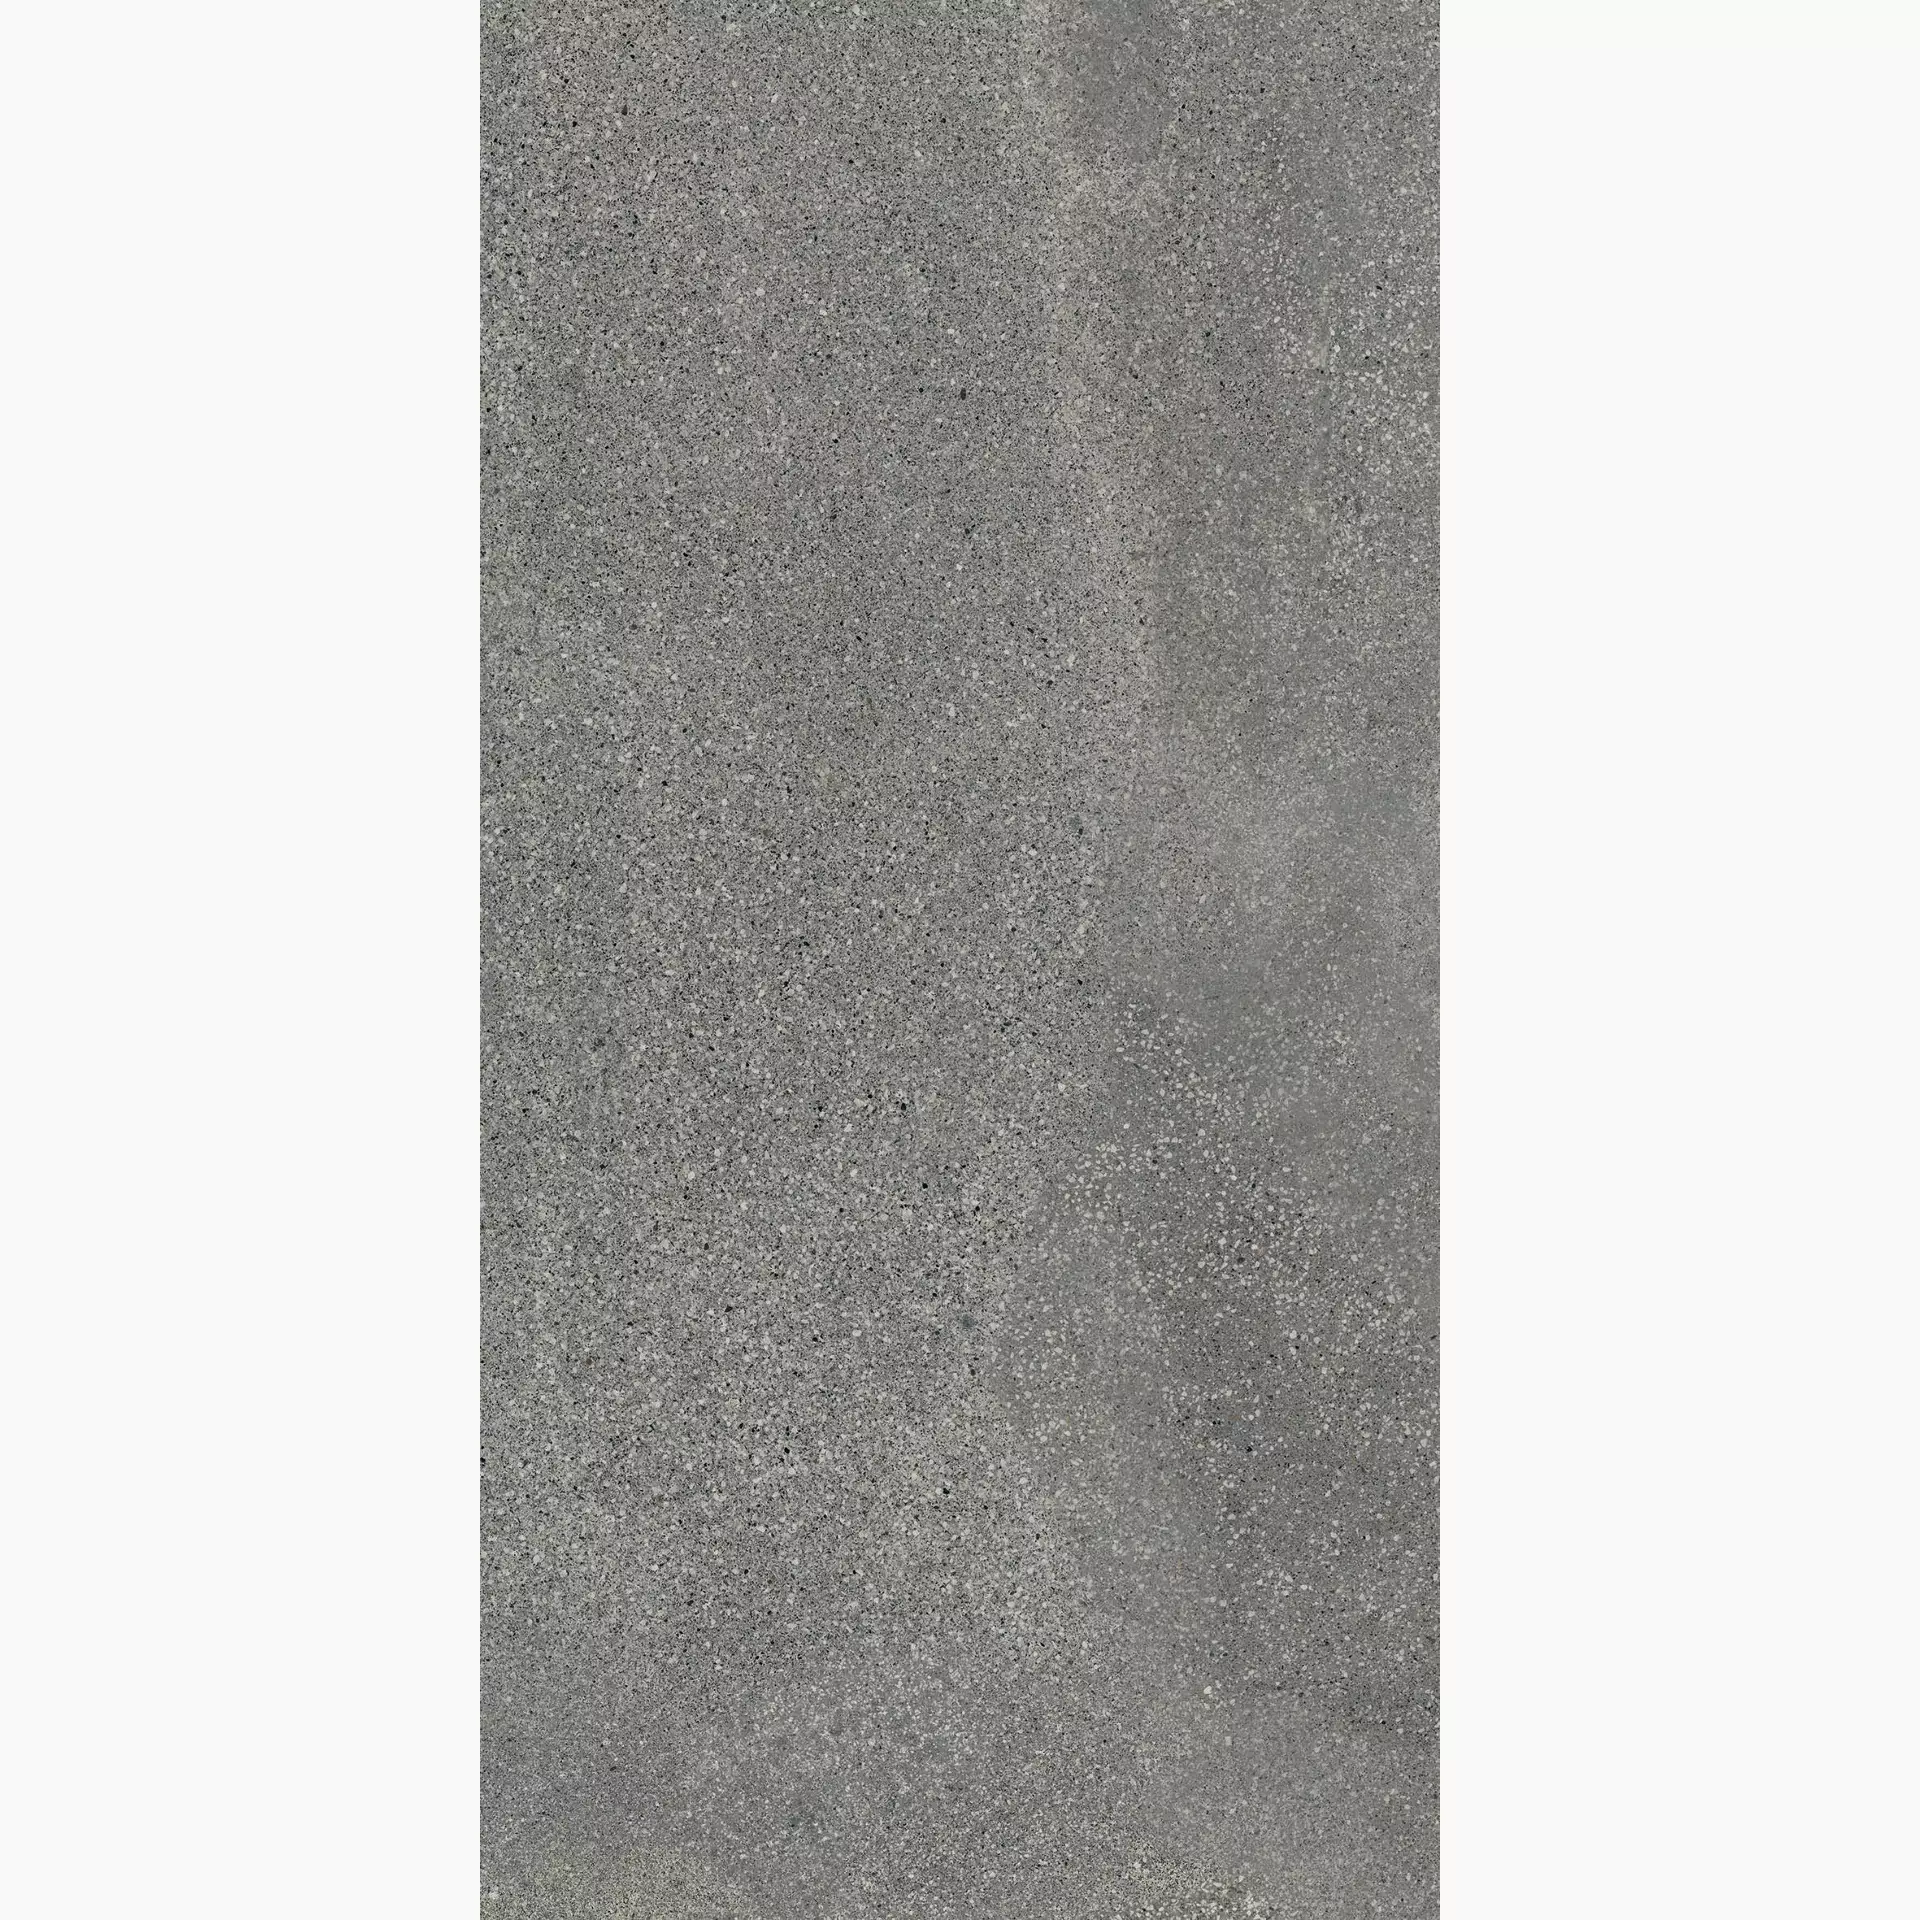 ABK Blend Concrete Grey Naturale PF60008259 30x60cm rectified 8,5mm